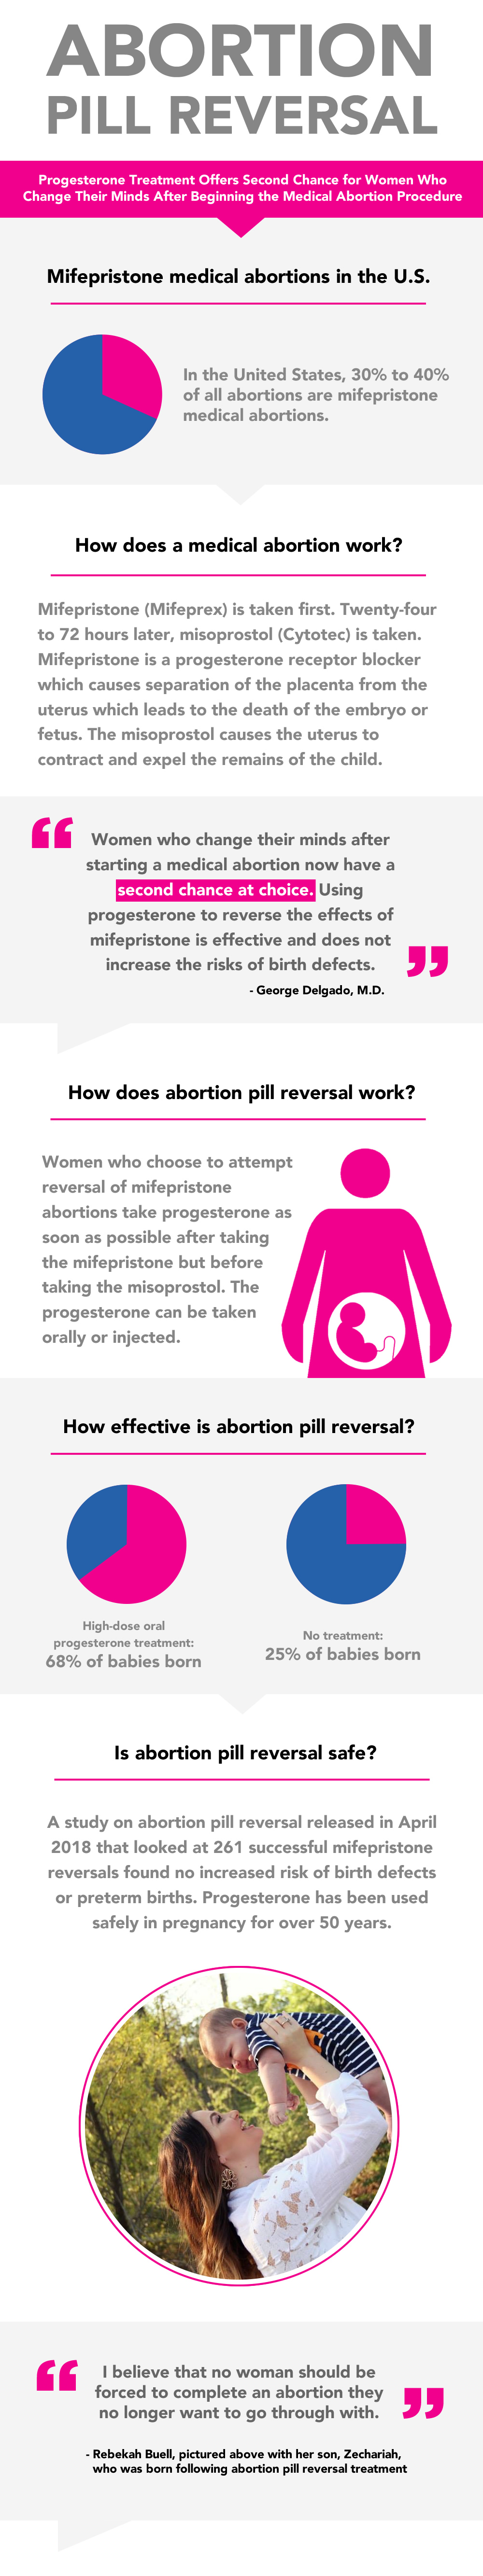 Abortion Pill Reversal Infographic